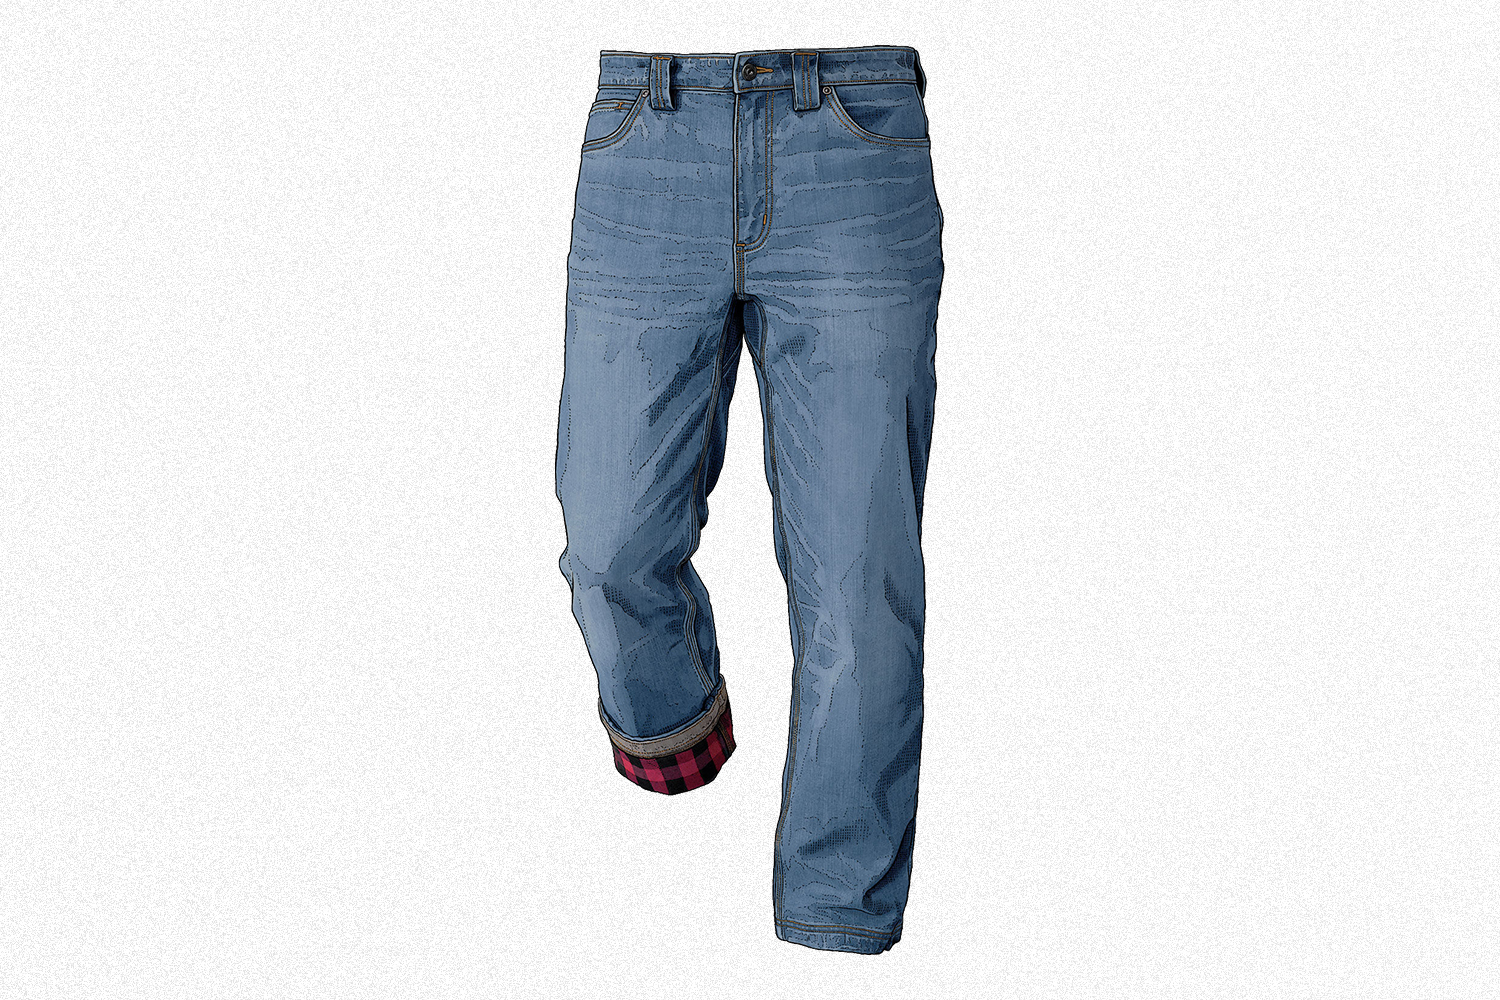 https://www.insidehook.com/wp-content/uploads/2021/10/duluth-trading-flannel-lined-jeans.jpg?fit=1200%2C800